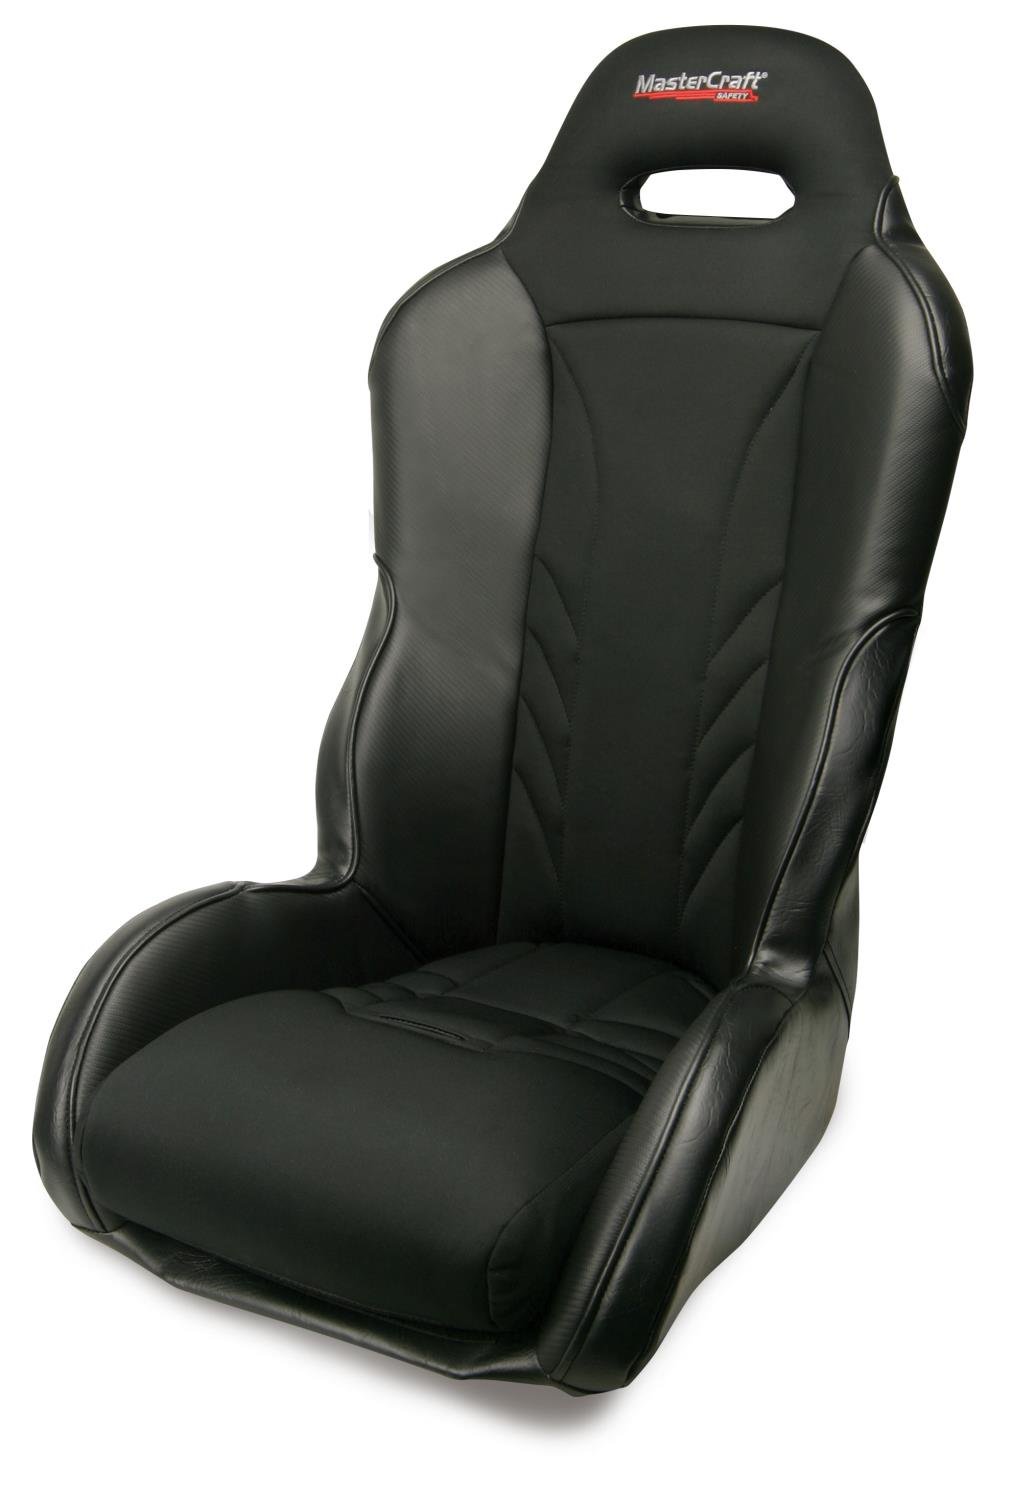 573409 S2/4 w/Fixed Headrest, Black Vinyl Outer w/Black Cloth Center & Black Side Panels, Black Trim, Universal